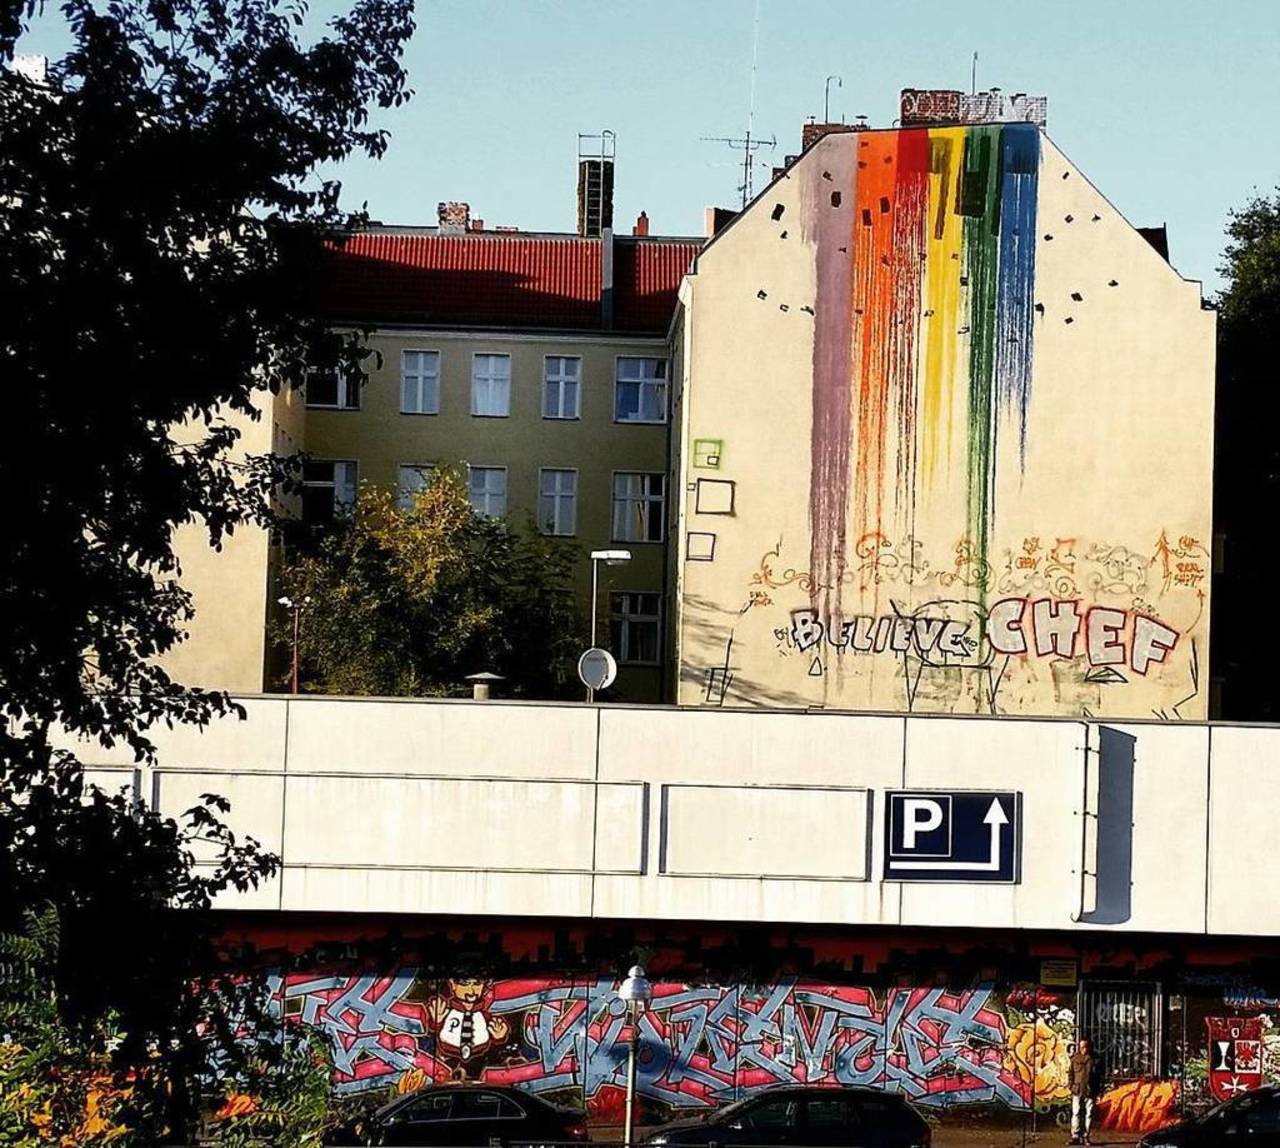 RT @StArtEverywhere: #Graffiti #instadaily #instaphoto #streetart #streetartberlin #Berlin #Germany #streetartphotographer #urbanart #pa… http://t.co/egMKH9gSkj